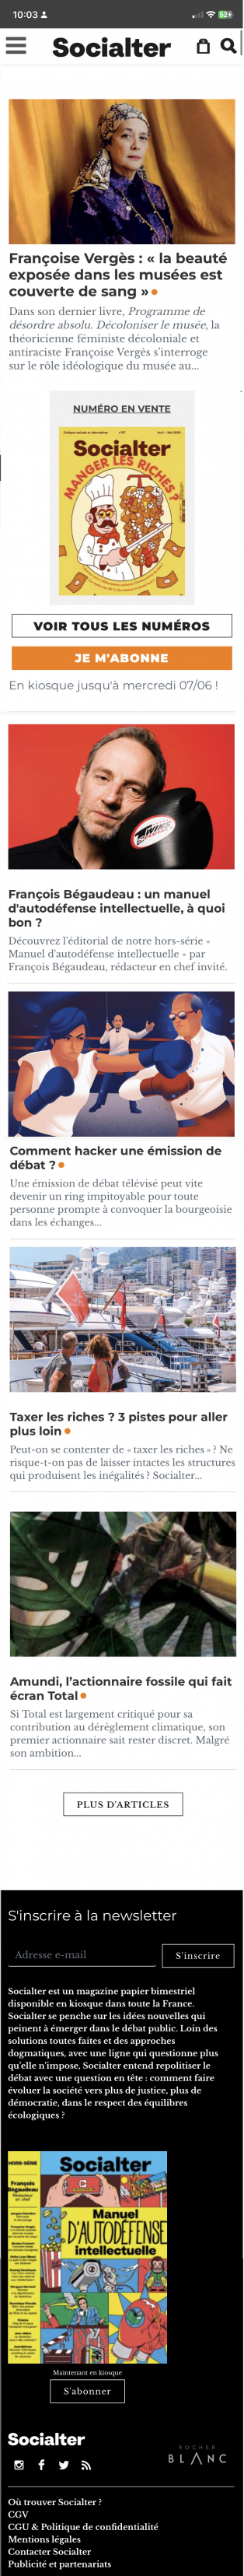 Rocher Blanc Monaco, responsive interface of the Socialter website